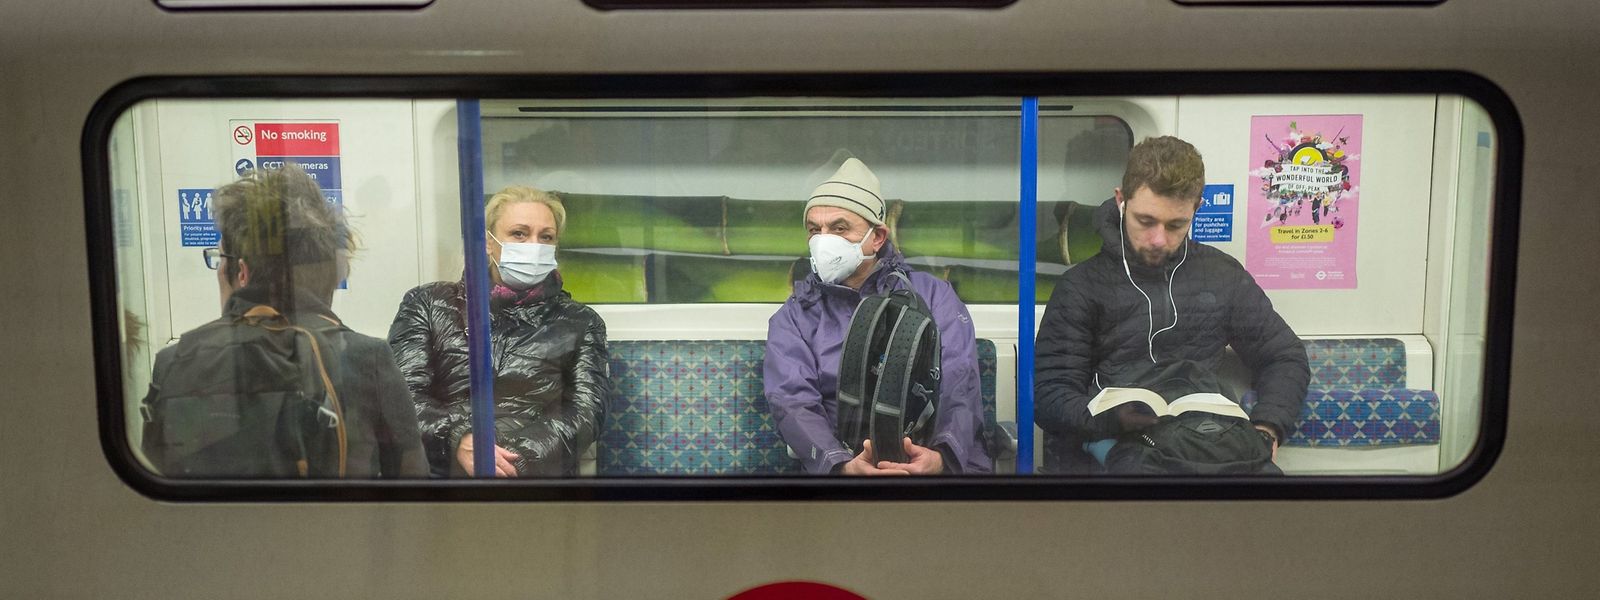 Passagiere in der Londoner U-Bahn.